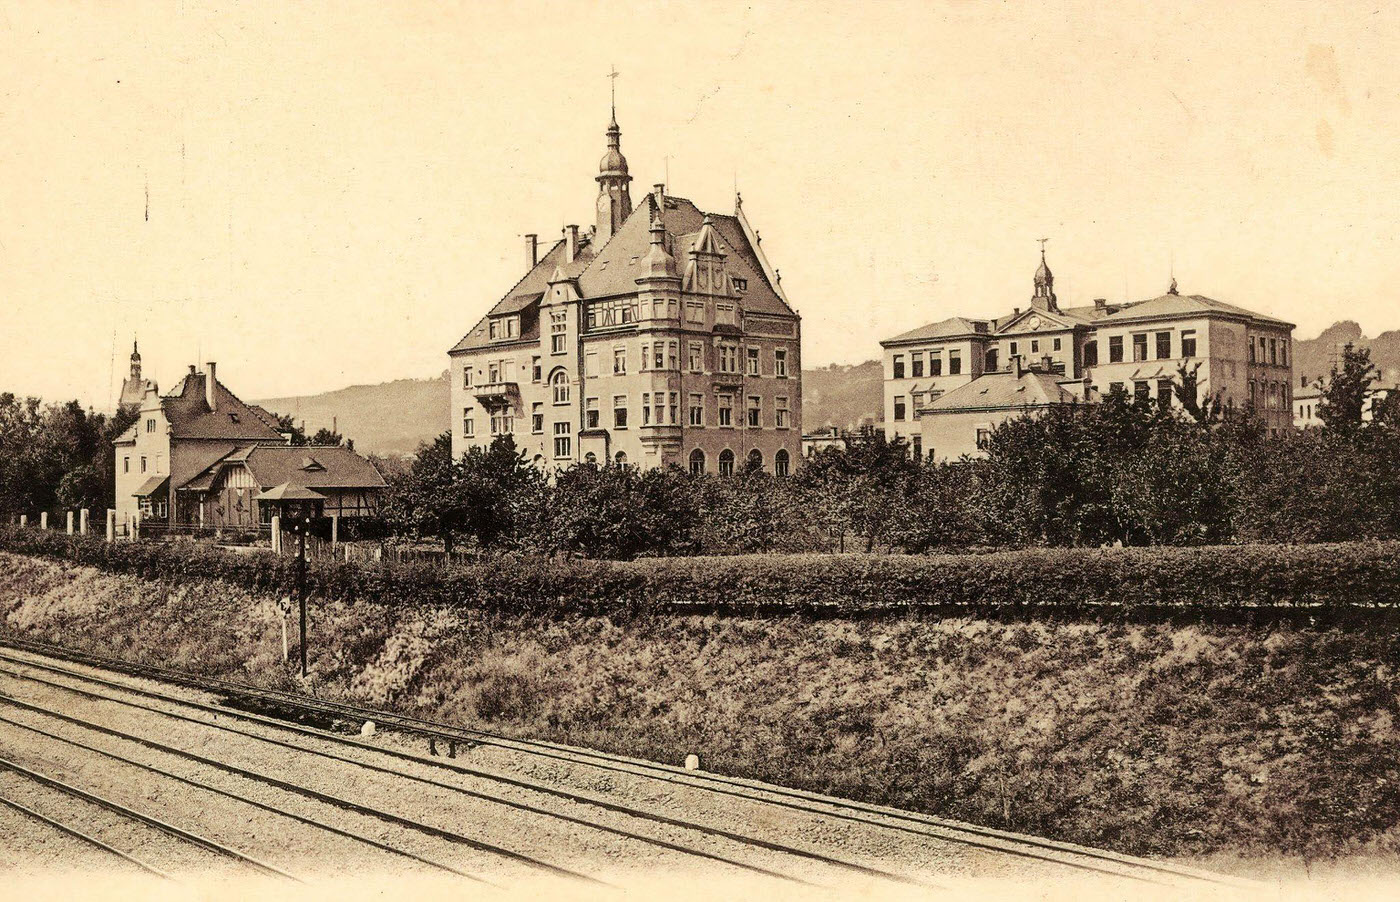 Rathaus Radebeul, Pestalozzischule, Landkreis Meissen, Polizeiamt Radebeul, Villa Pestalozzistrasse, Lutherkirche, Lossnitzgrundbahn, Radebeul, Germany, 1901.